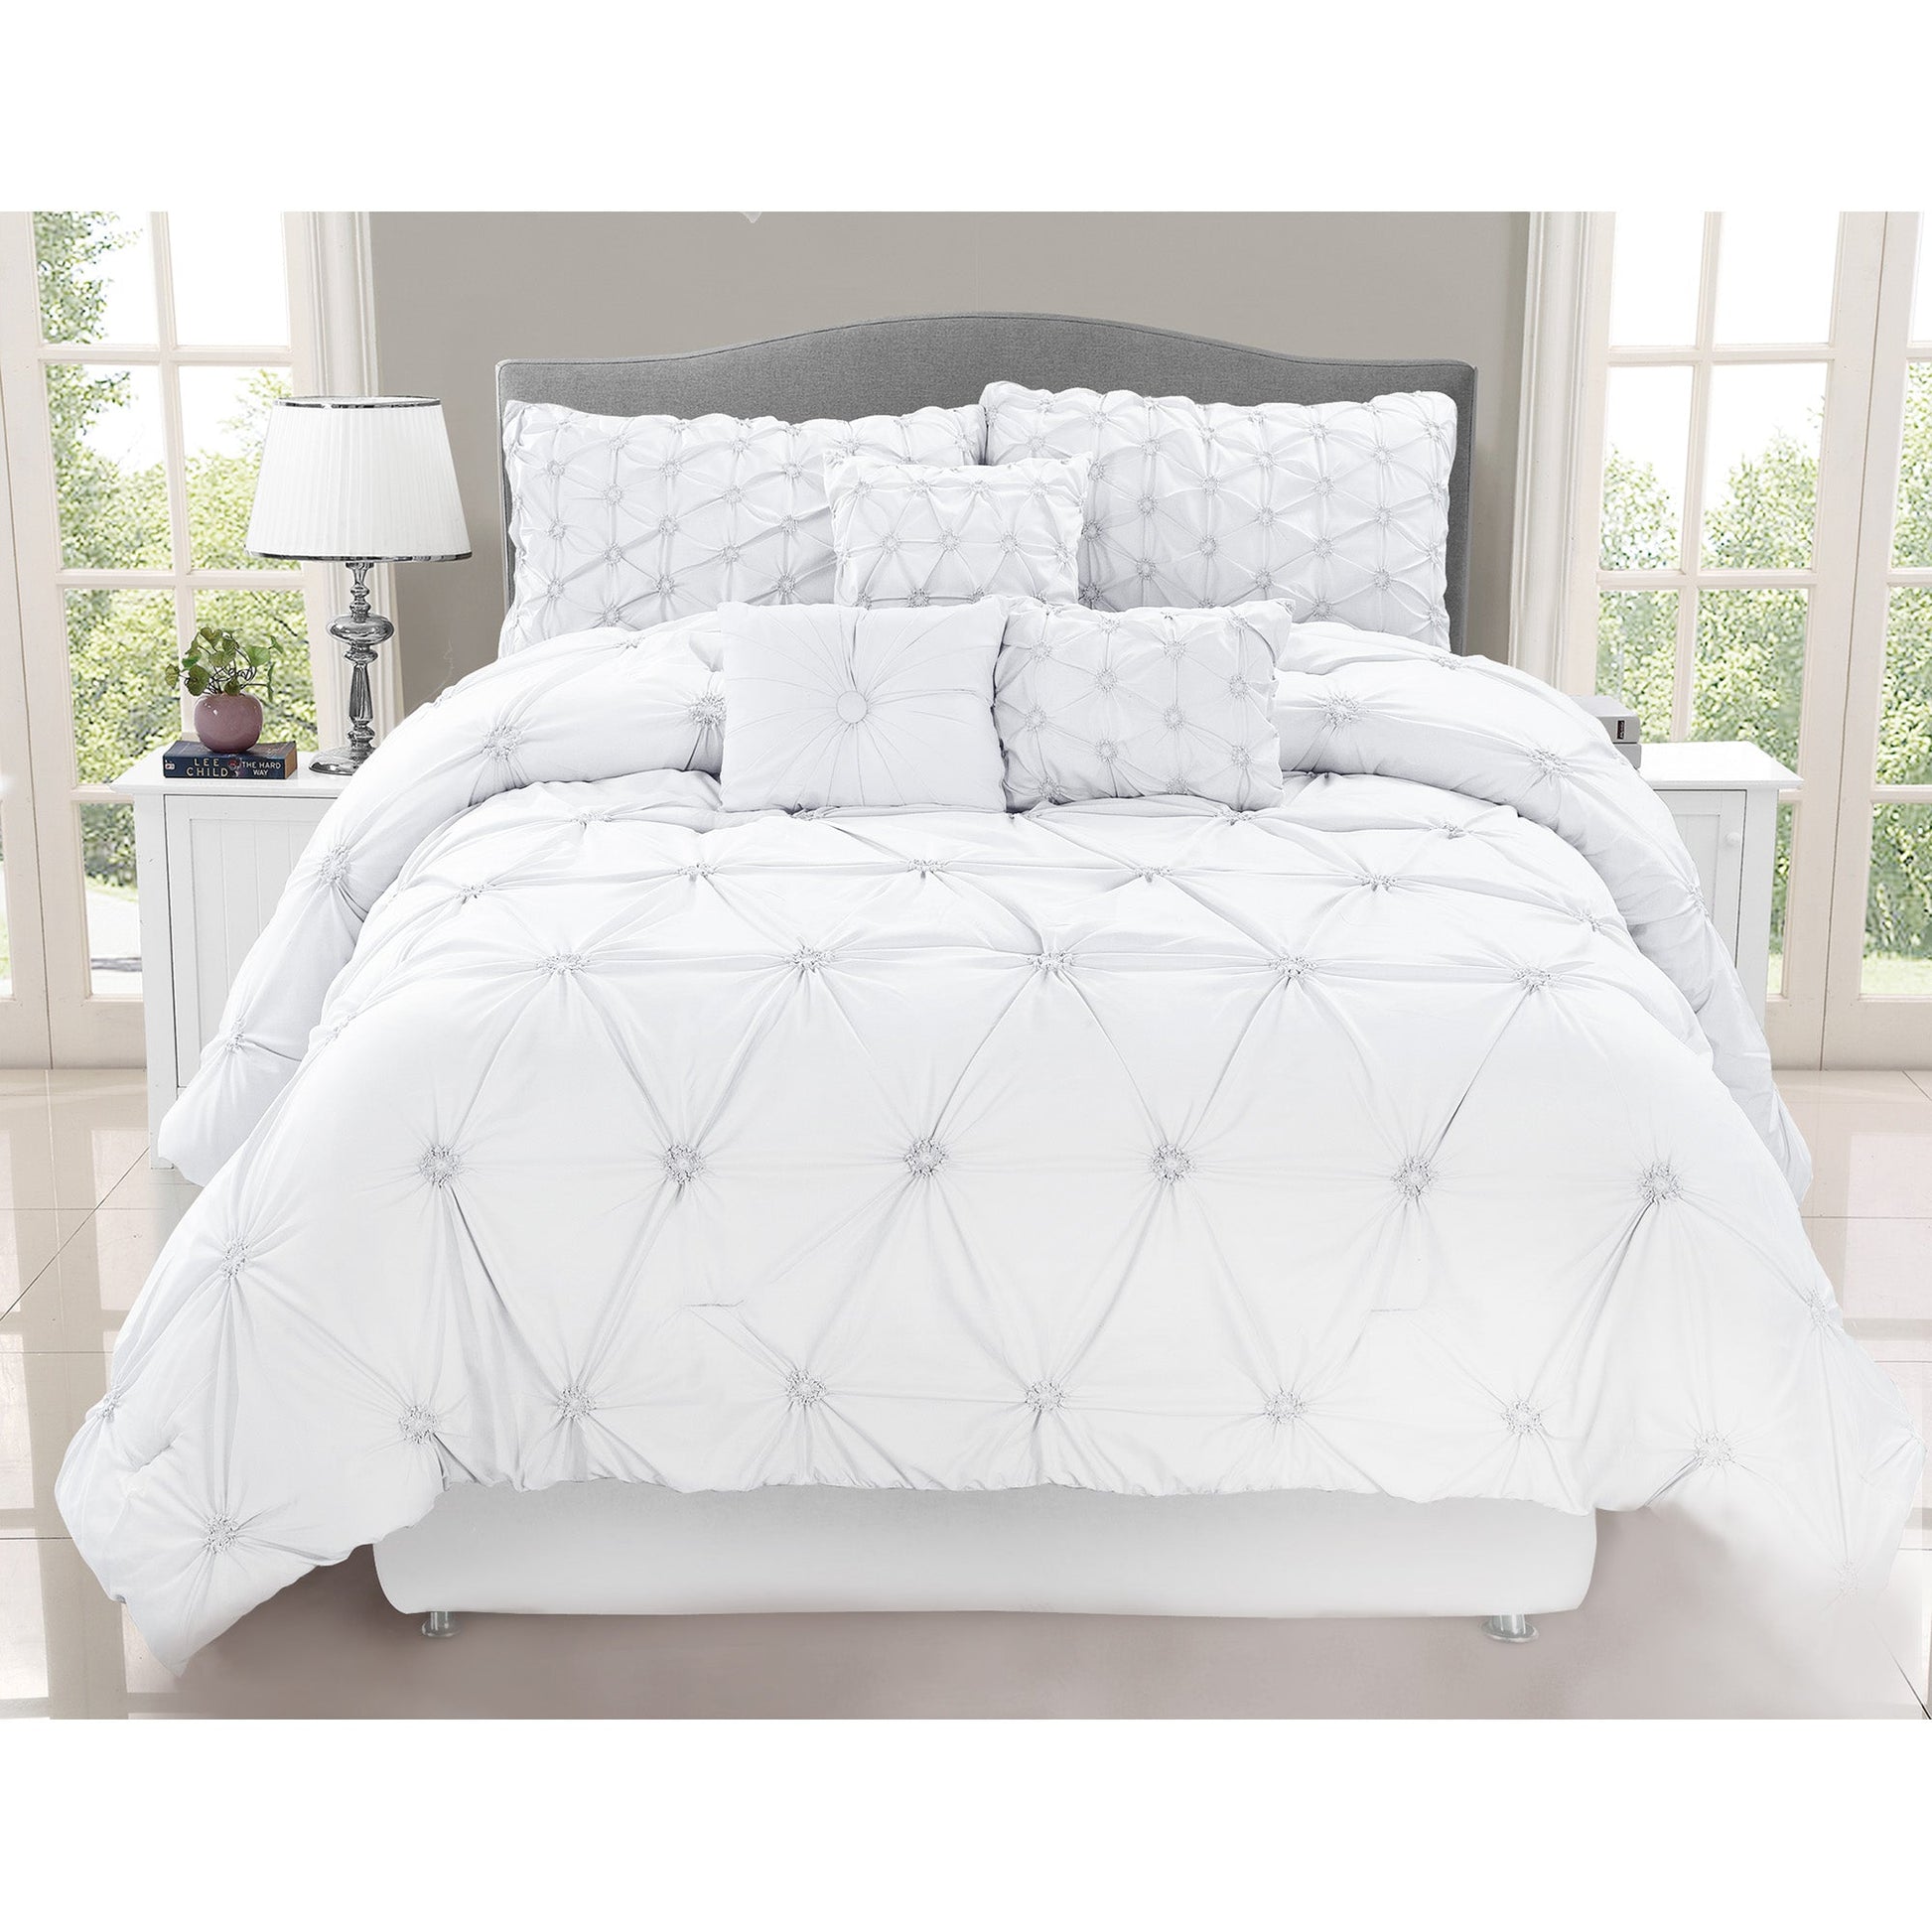 Comforter Chateau 7 Piece King White - DecoElegance - Bedding Comforter Set